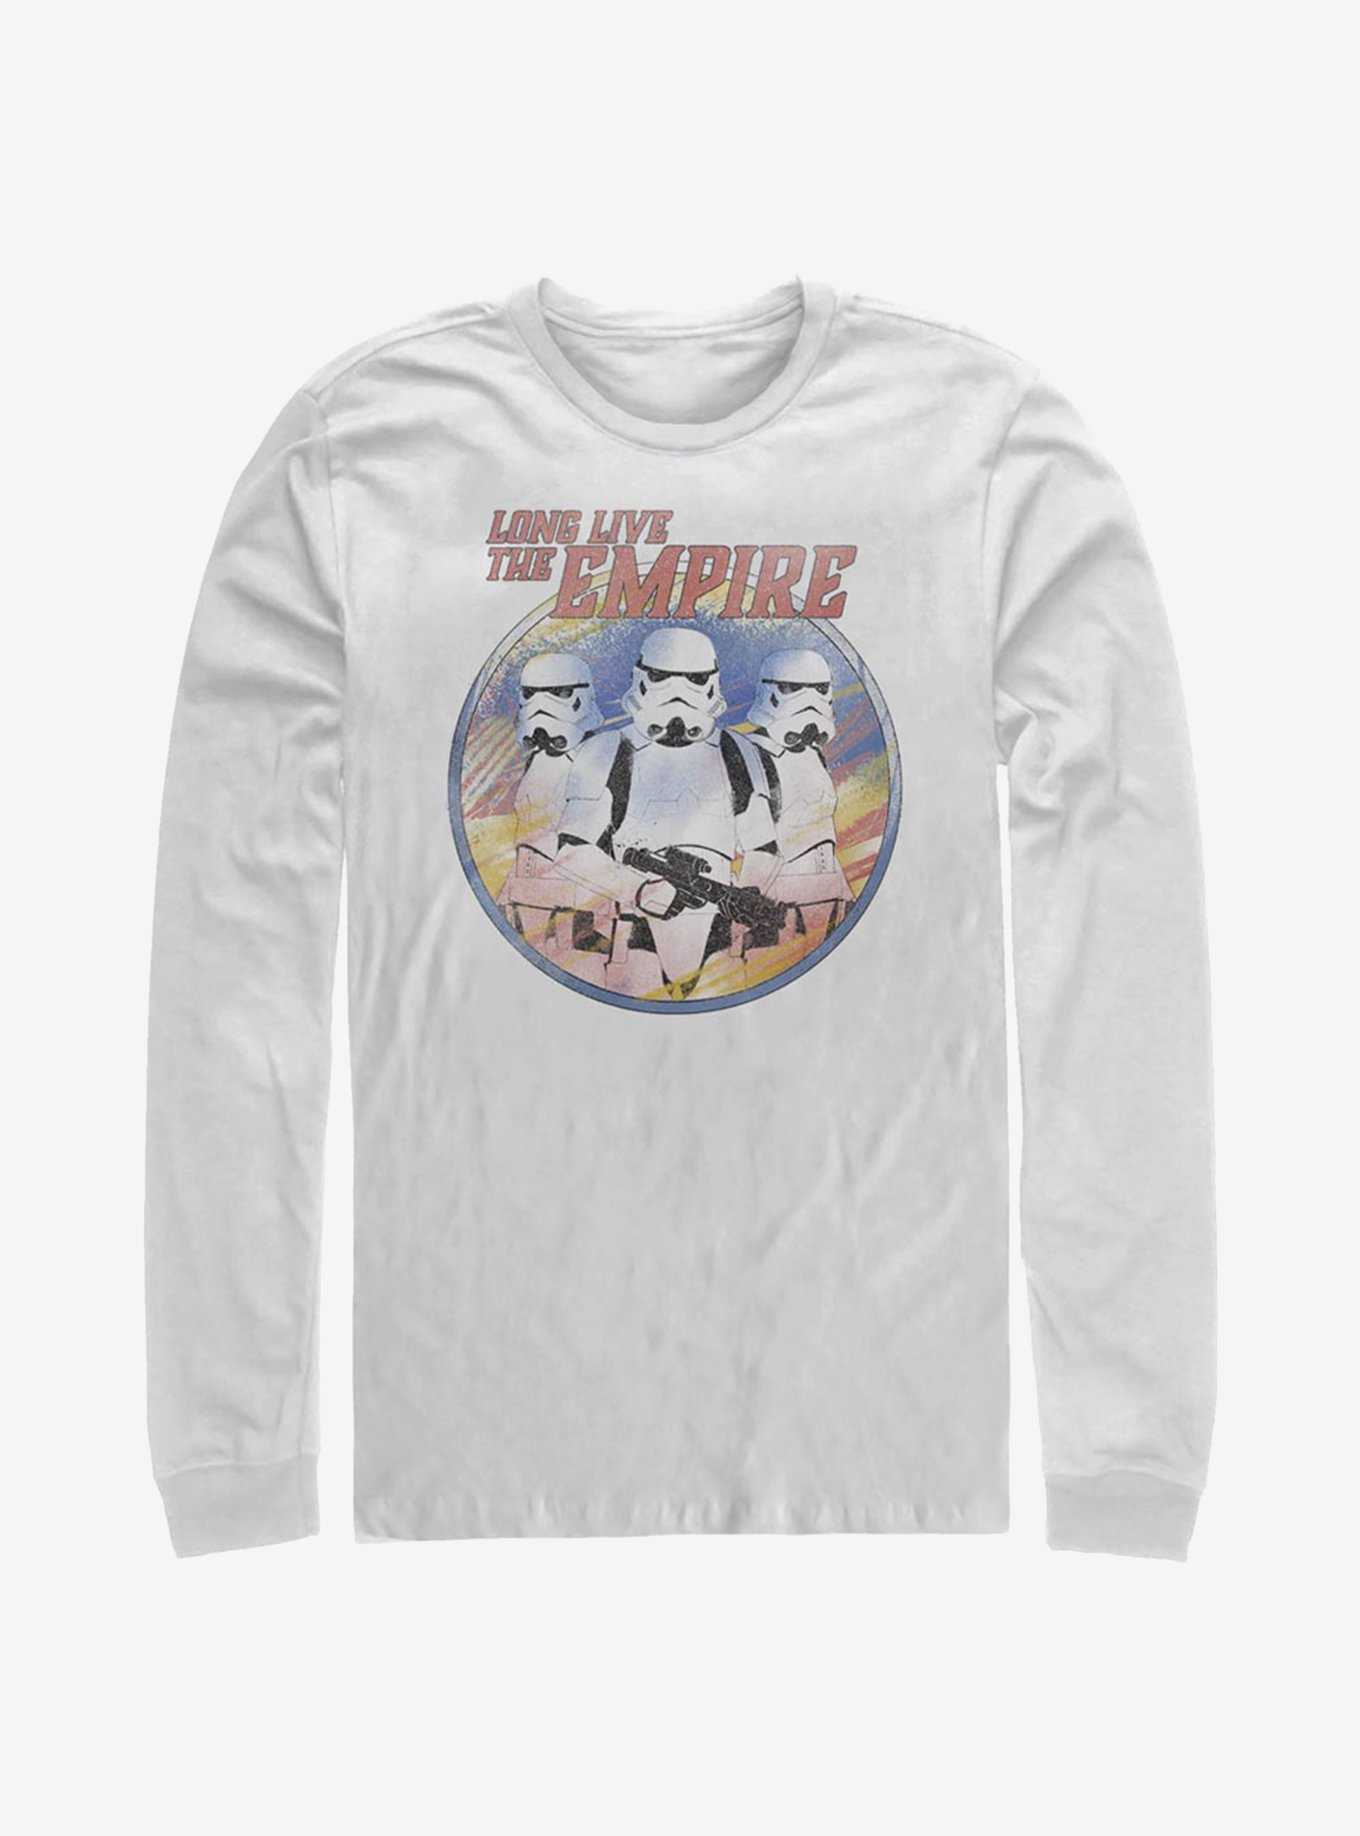 Star Wars The Mandalorian Long Live The Empire Long-Sleeve T-Shirt, , hi-res